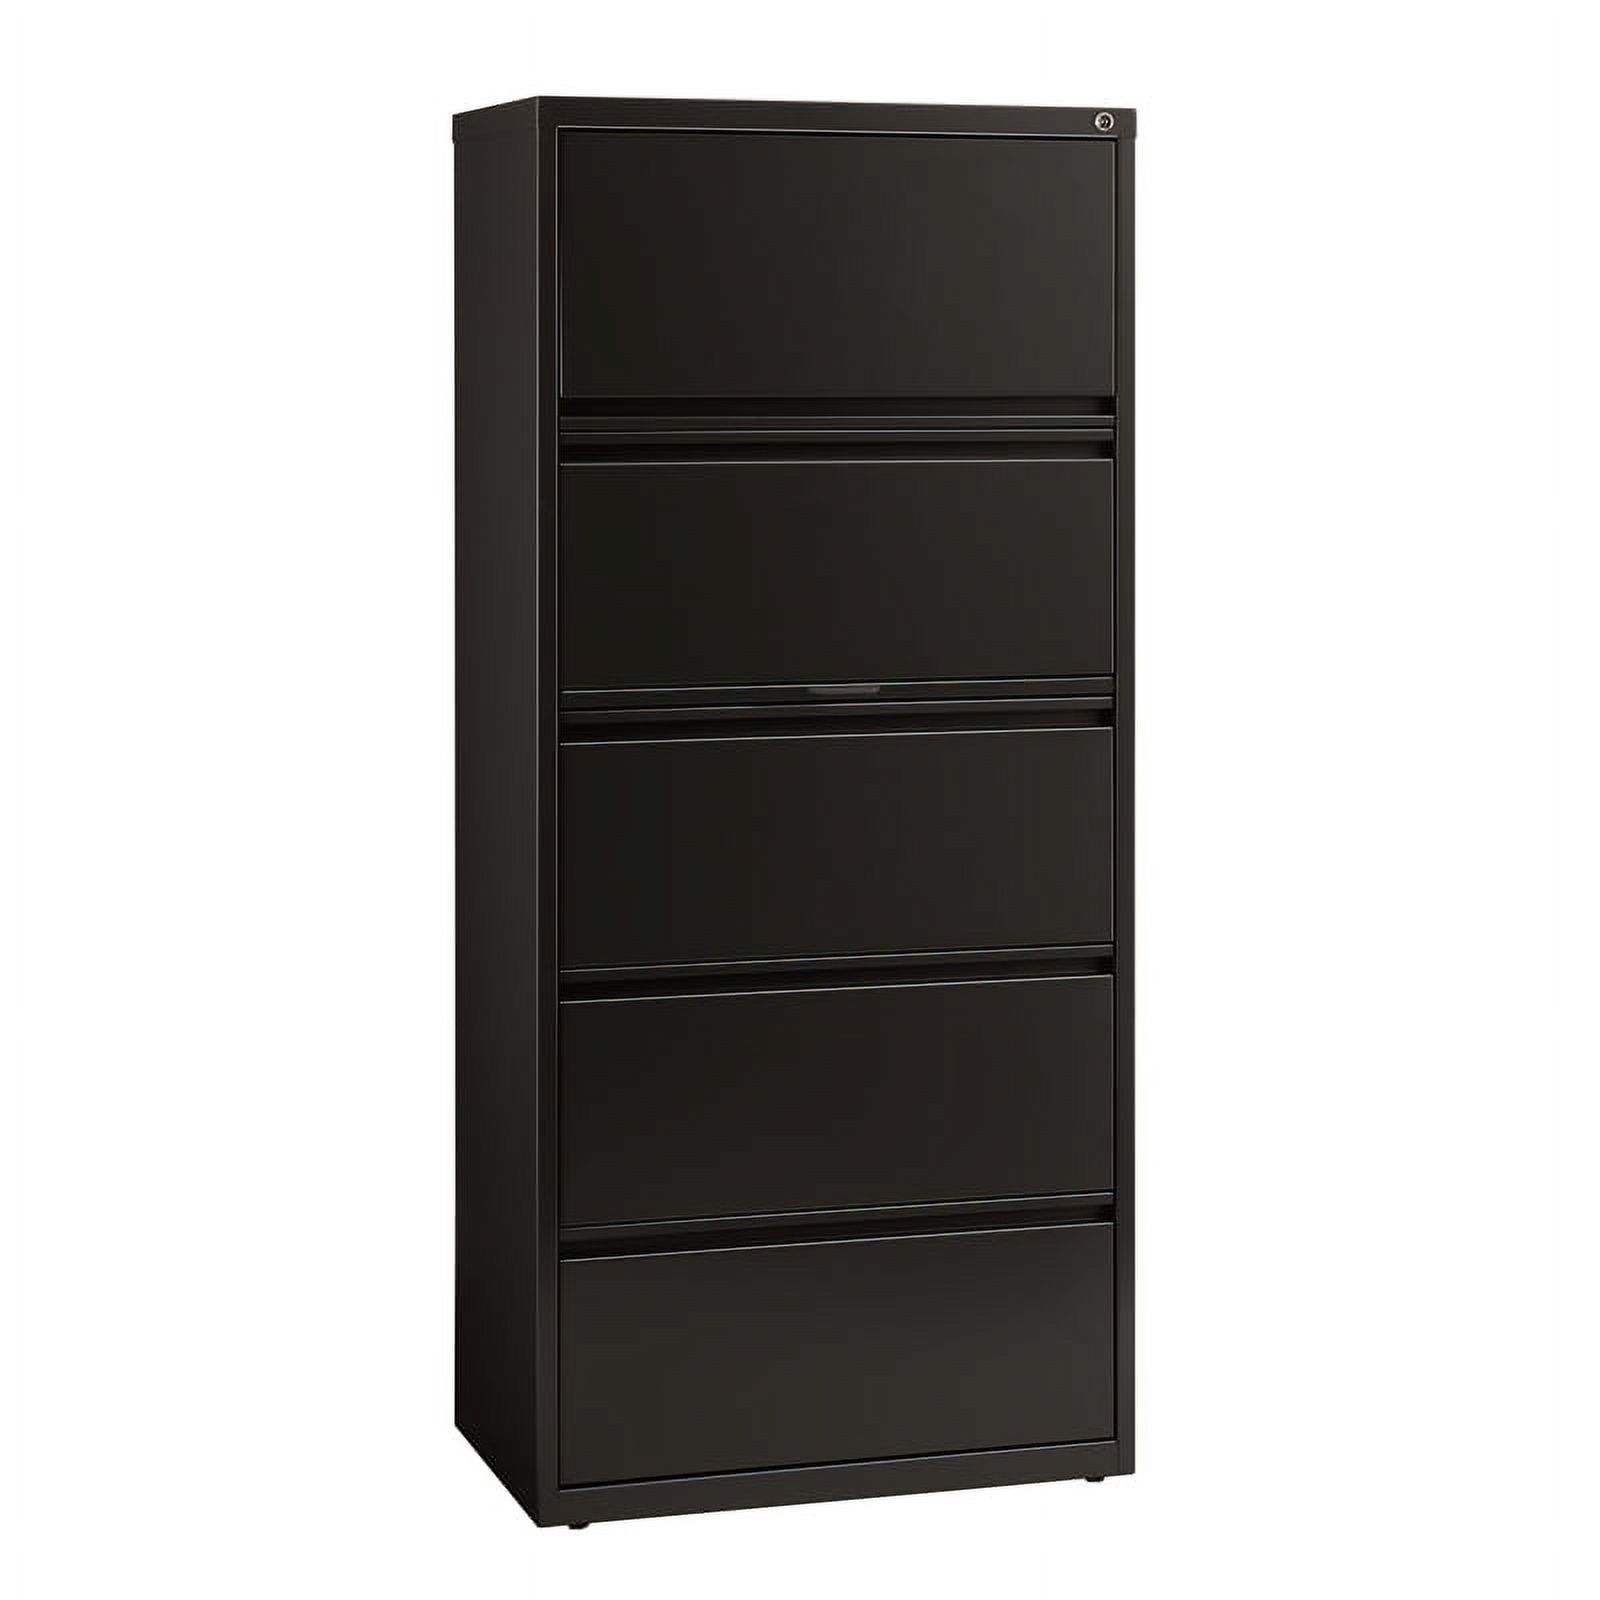 Scranton & Co 30" 5-Drawer Modern Metal Lateral File Cabinet in Black - image 1 of 6